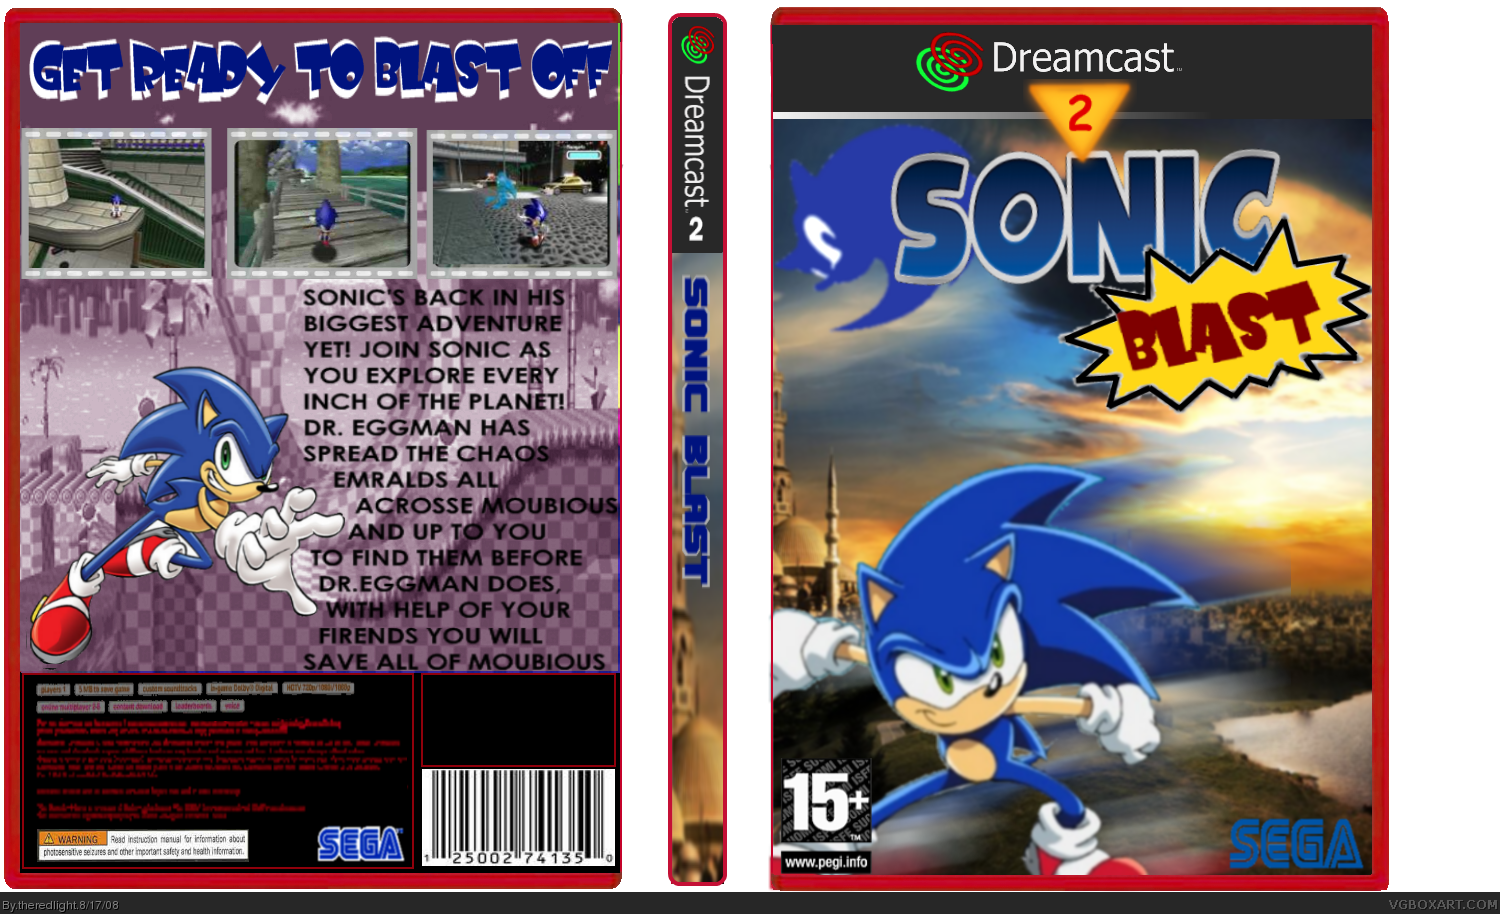 Dreamcast 2:Sonic Blast box cover